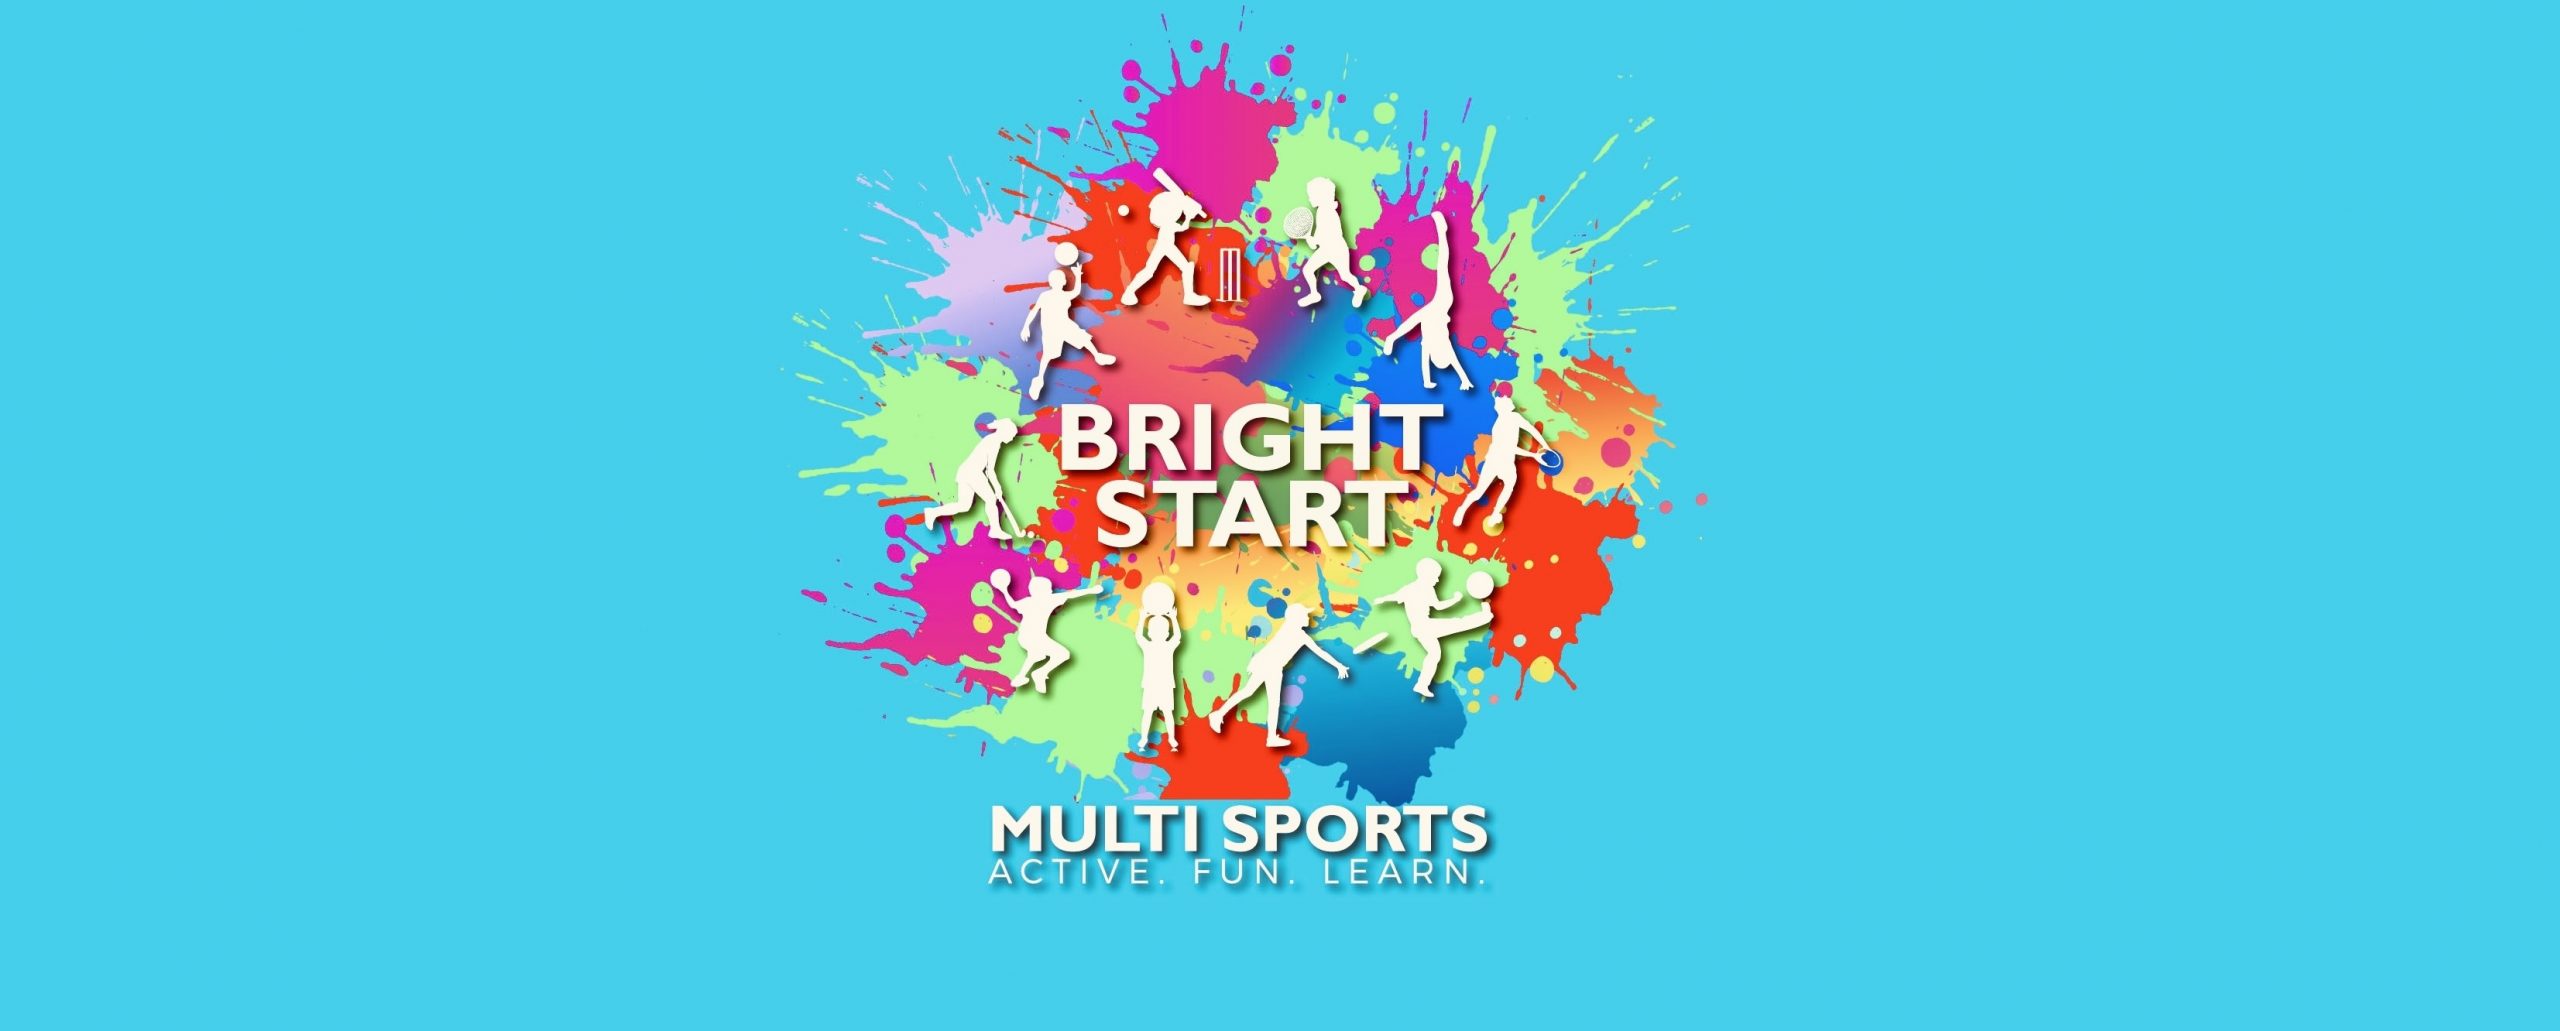 Bright Start Multi Sports